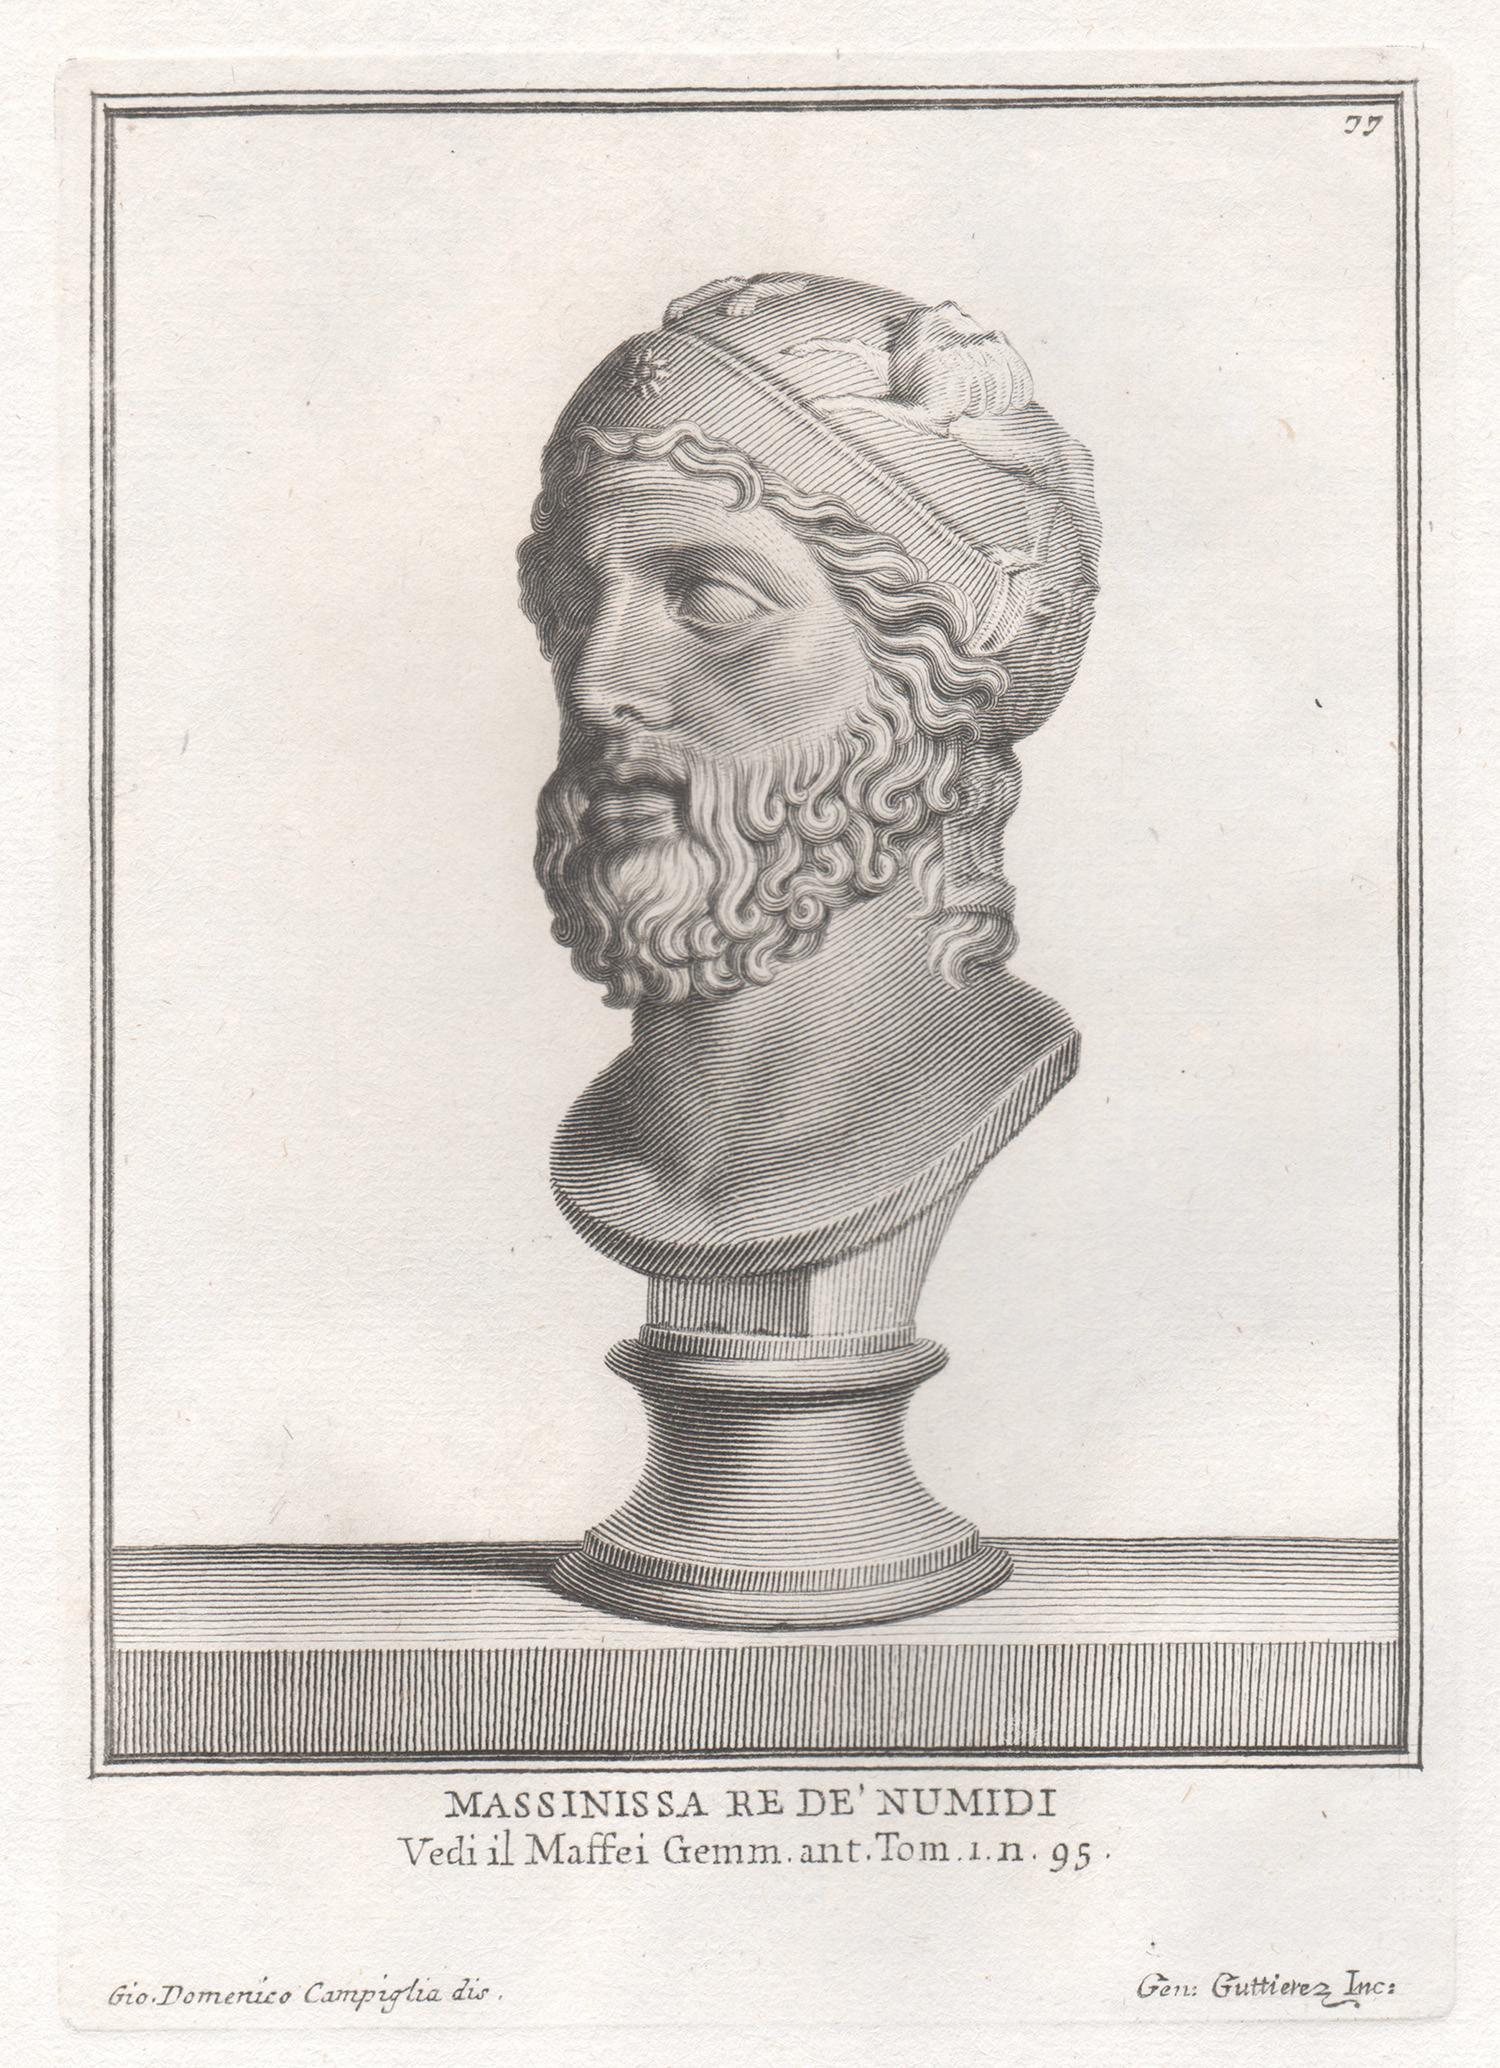 Giovanni Domenico Campiglia Figurative Print - Masinissa, King of Nubia, C18th Grand Tour Classical antique engraving print